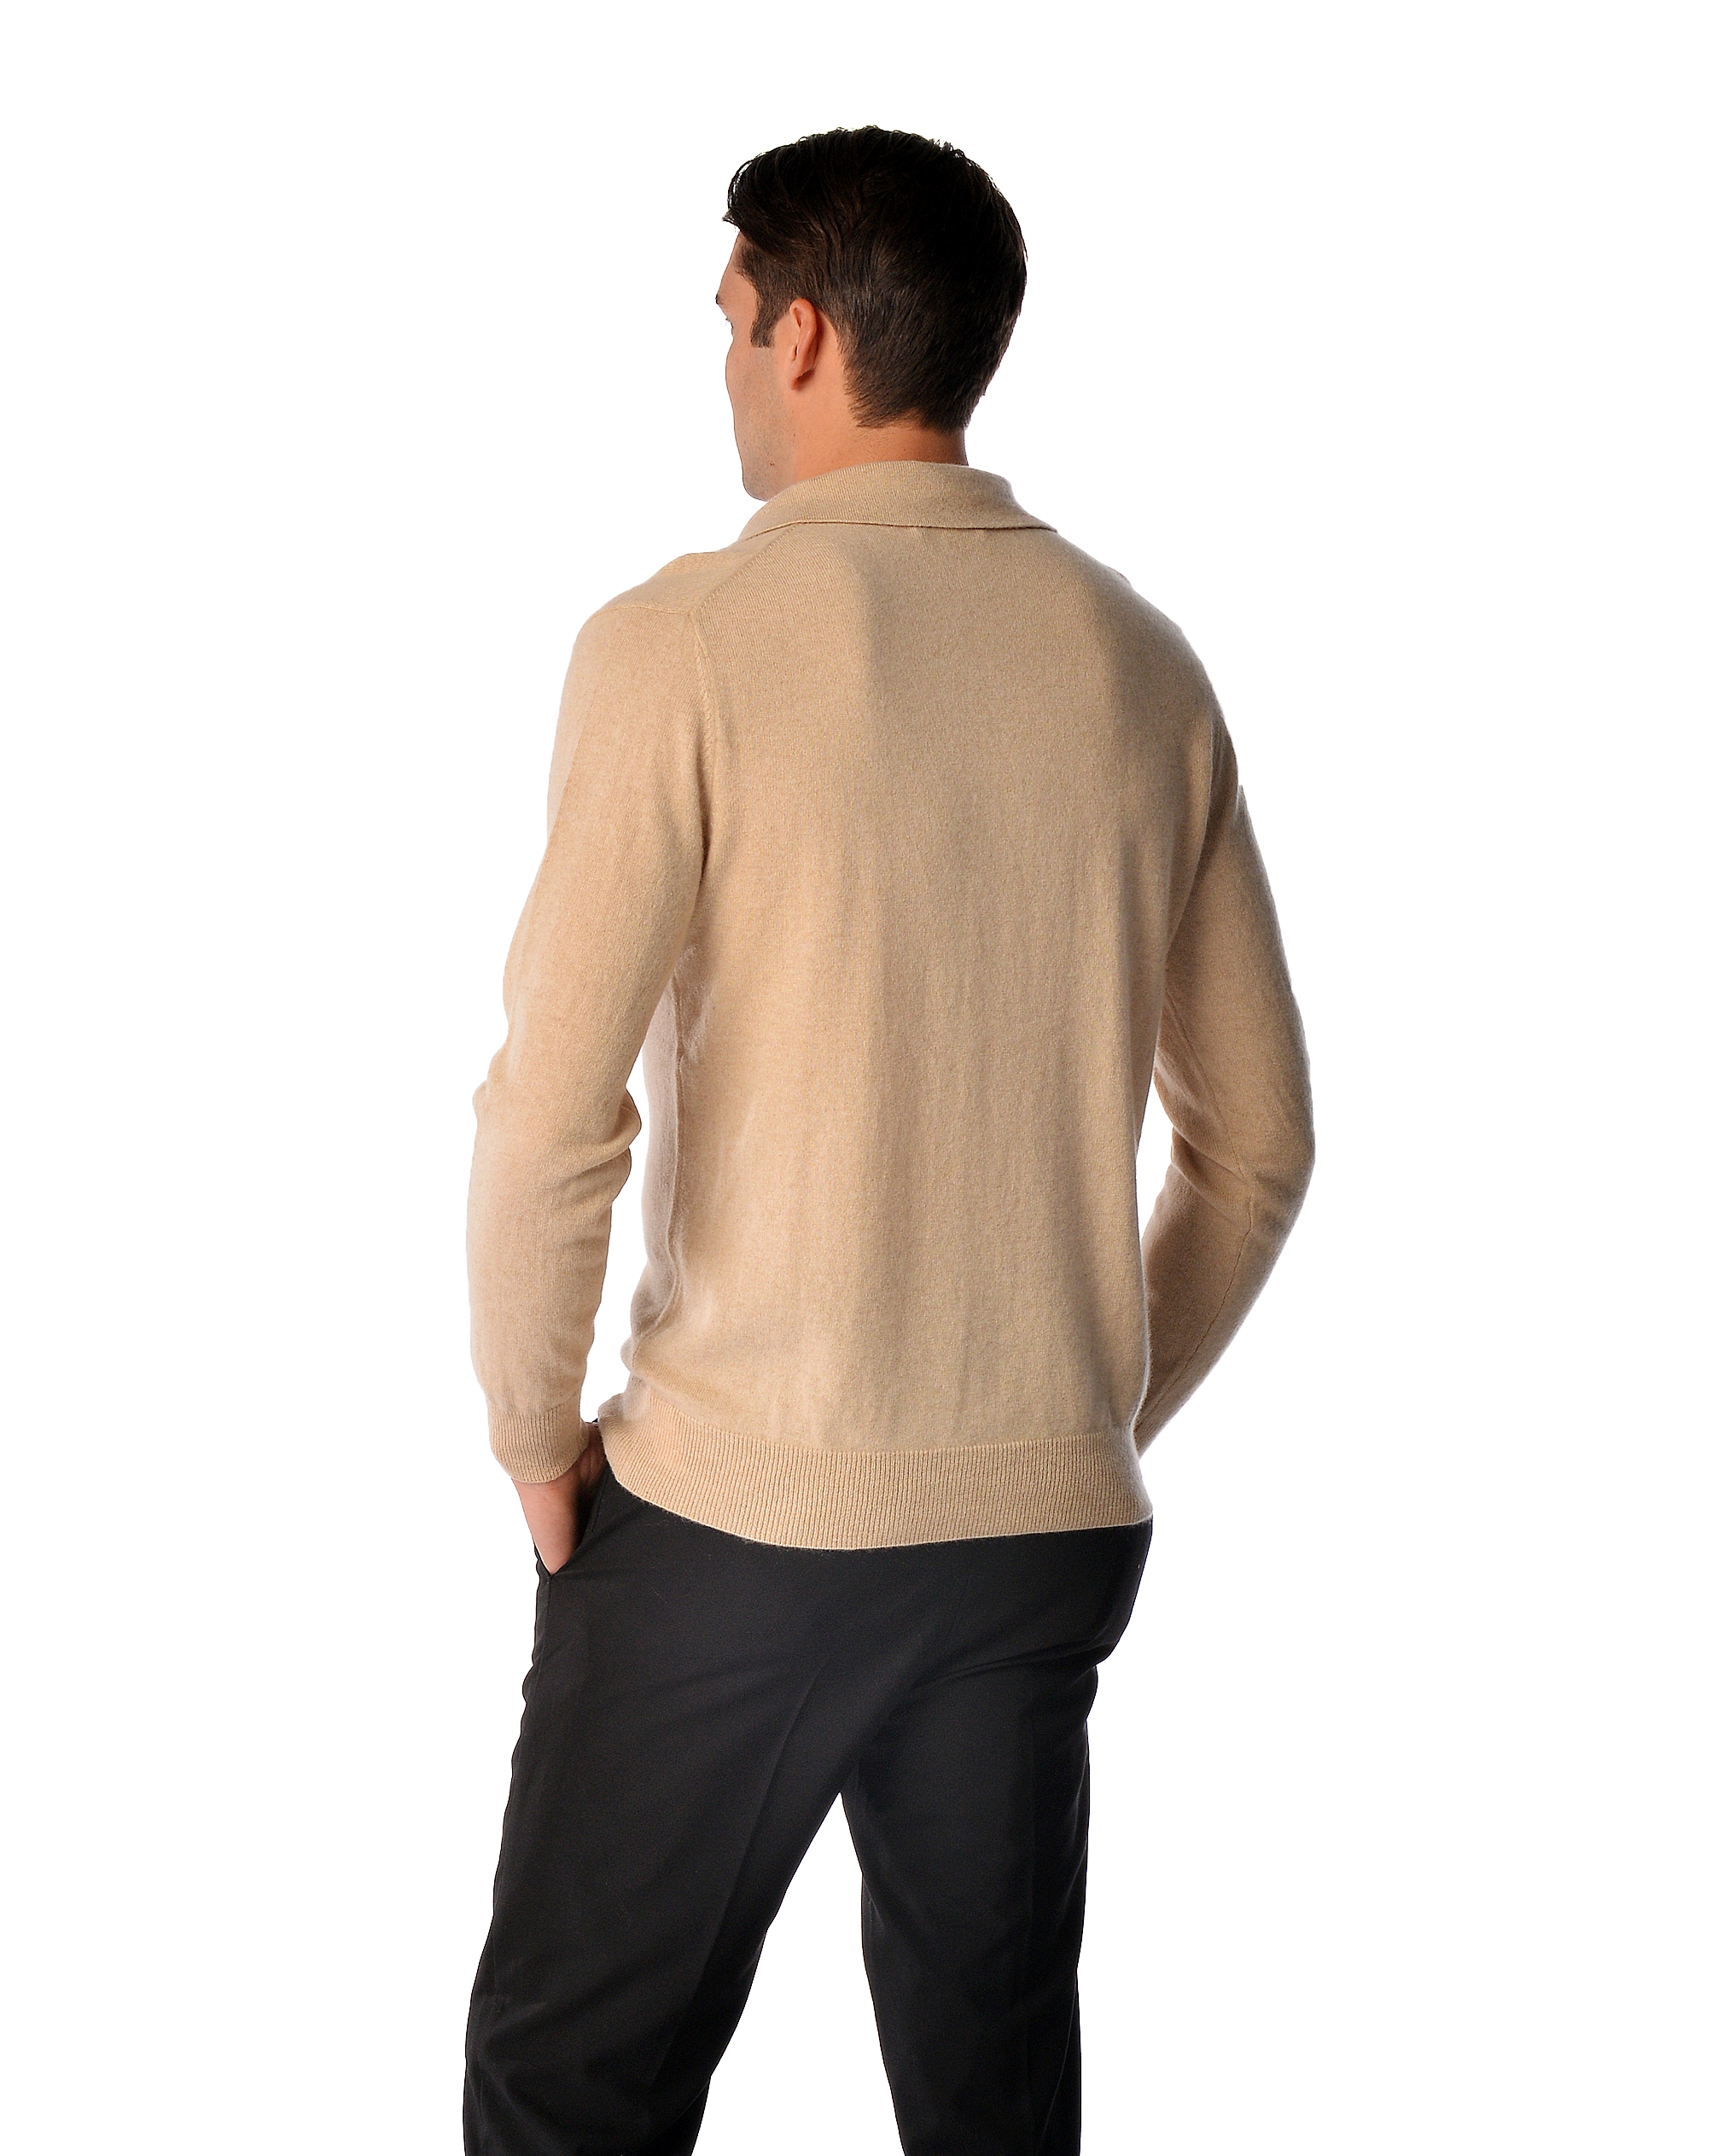 Men\'s Pure Cashmere Polo Sweater (Charcoal, Medium)